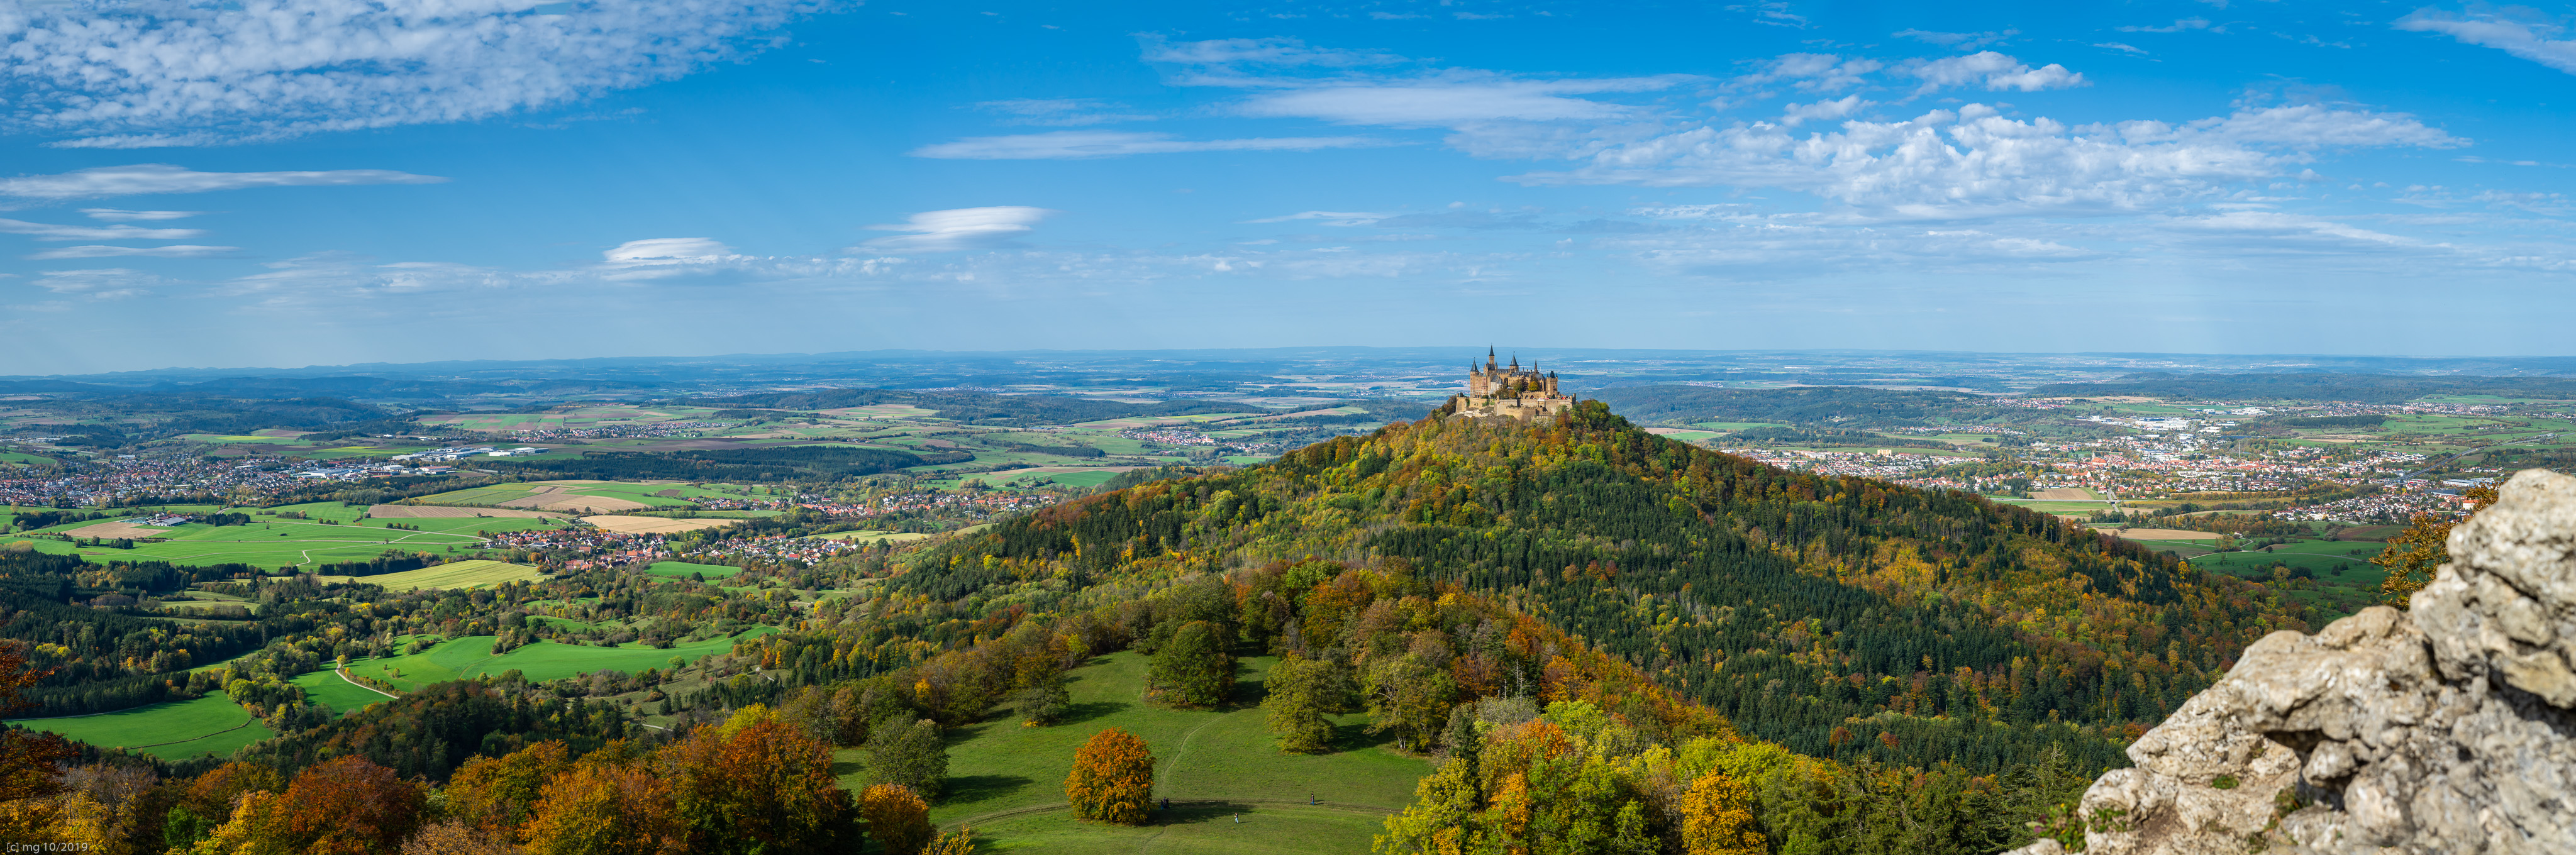 Фото бесплатно Hohenzollern Castle, Швабский Альб, Германия